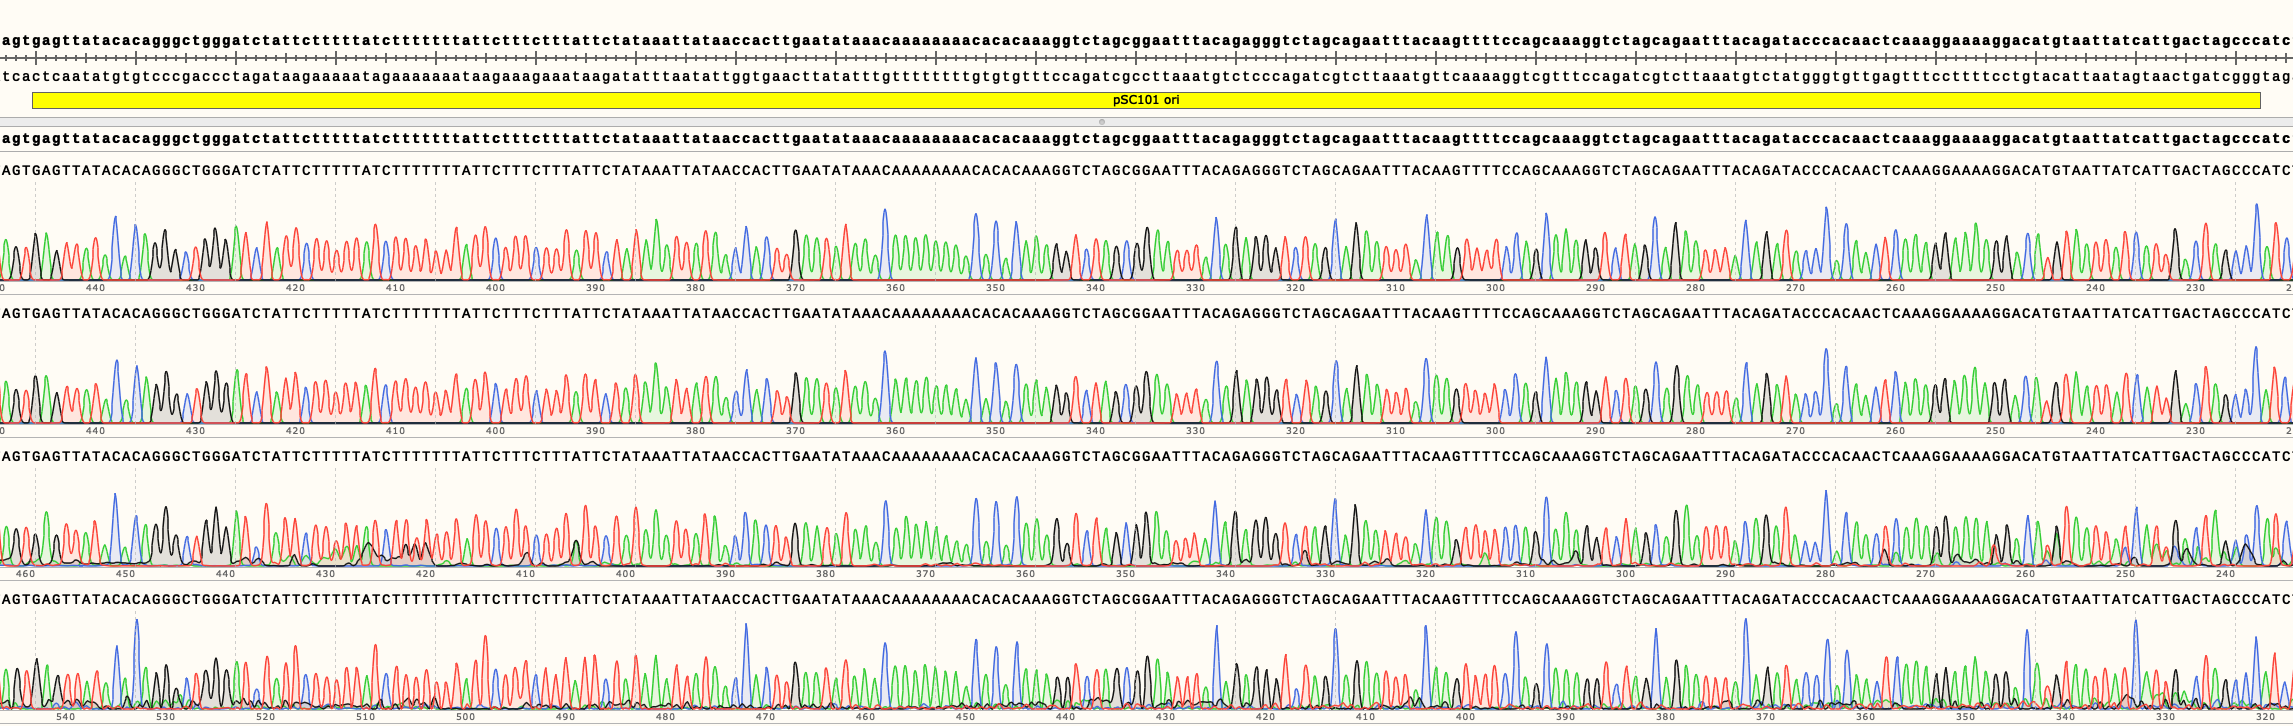 Representative sequencing of the origin of replication pSC101 of pSB4A0#.